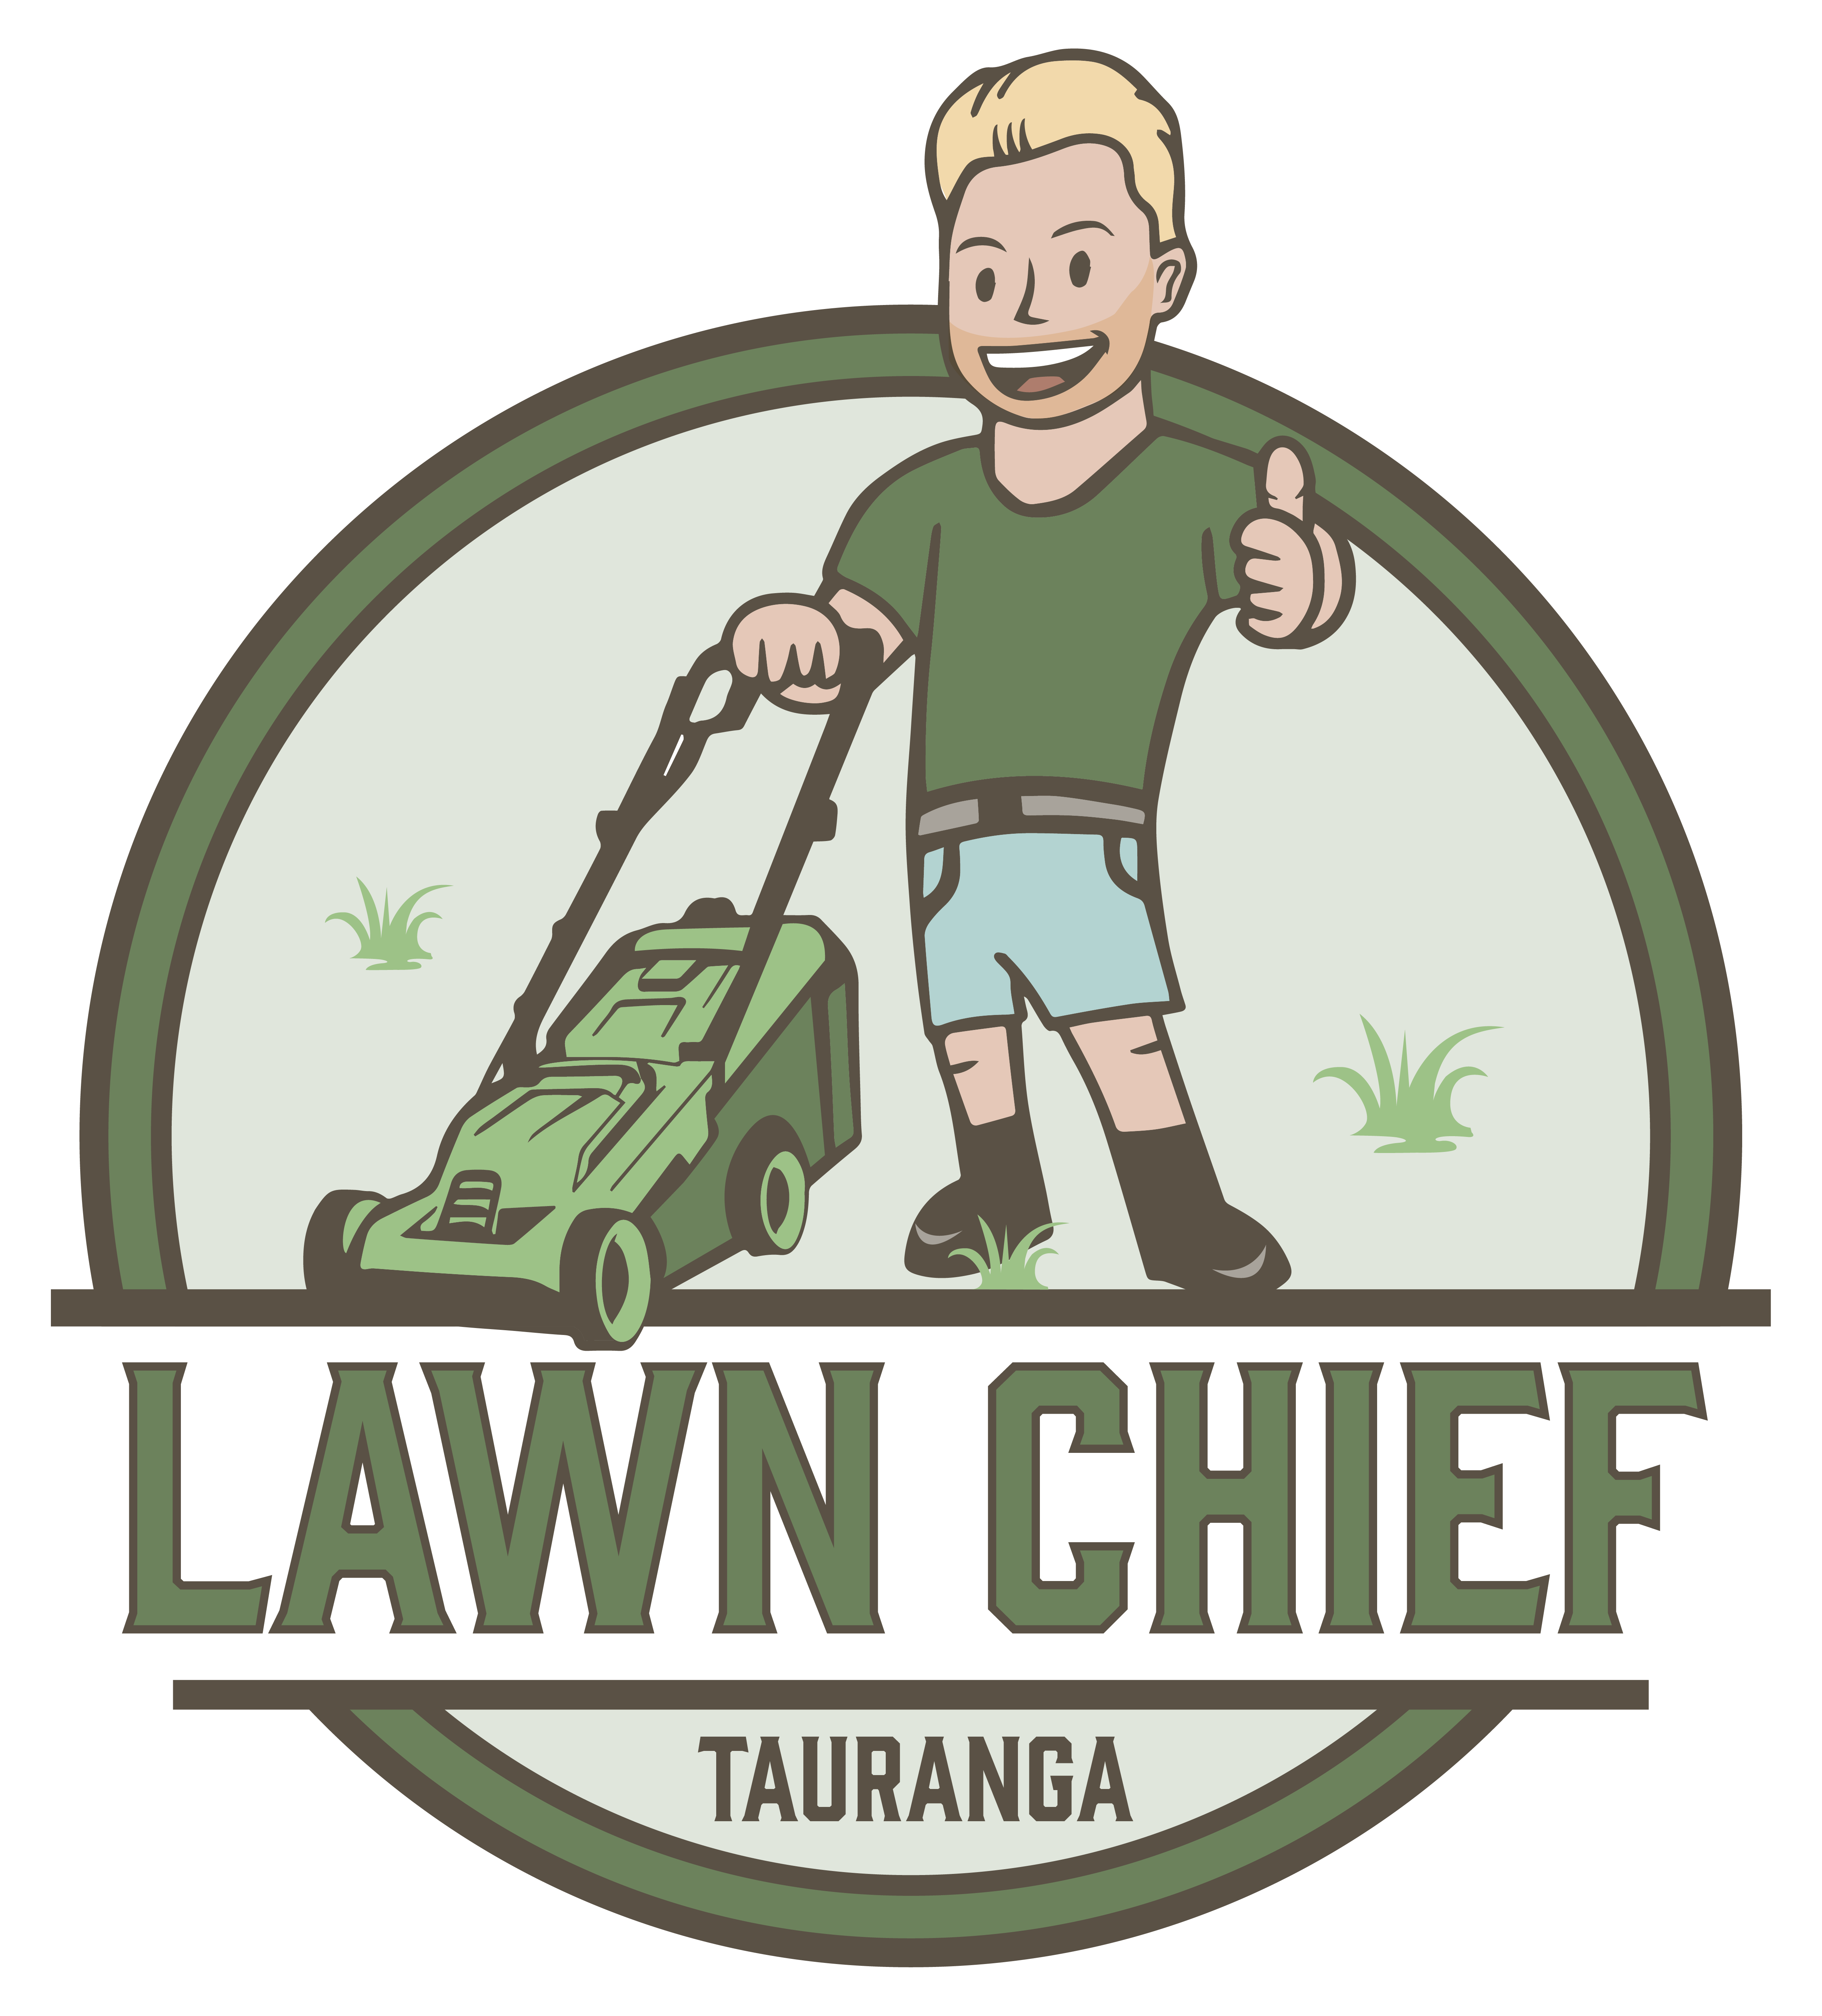 Lawn Mowing Chief Tauranga LOGO